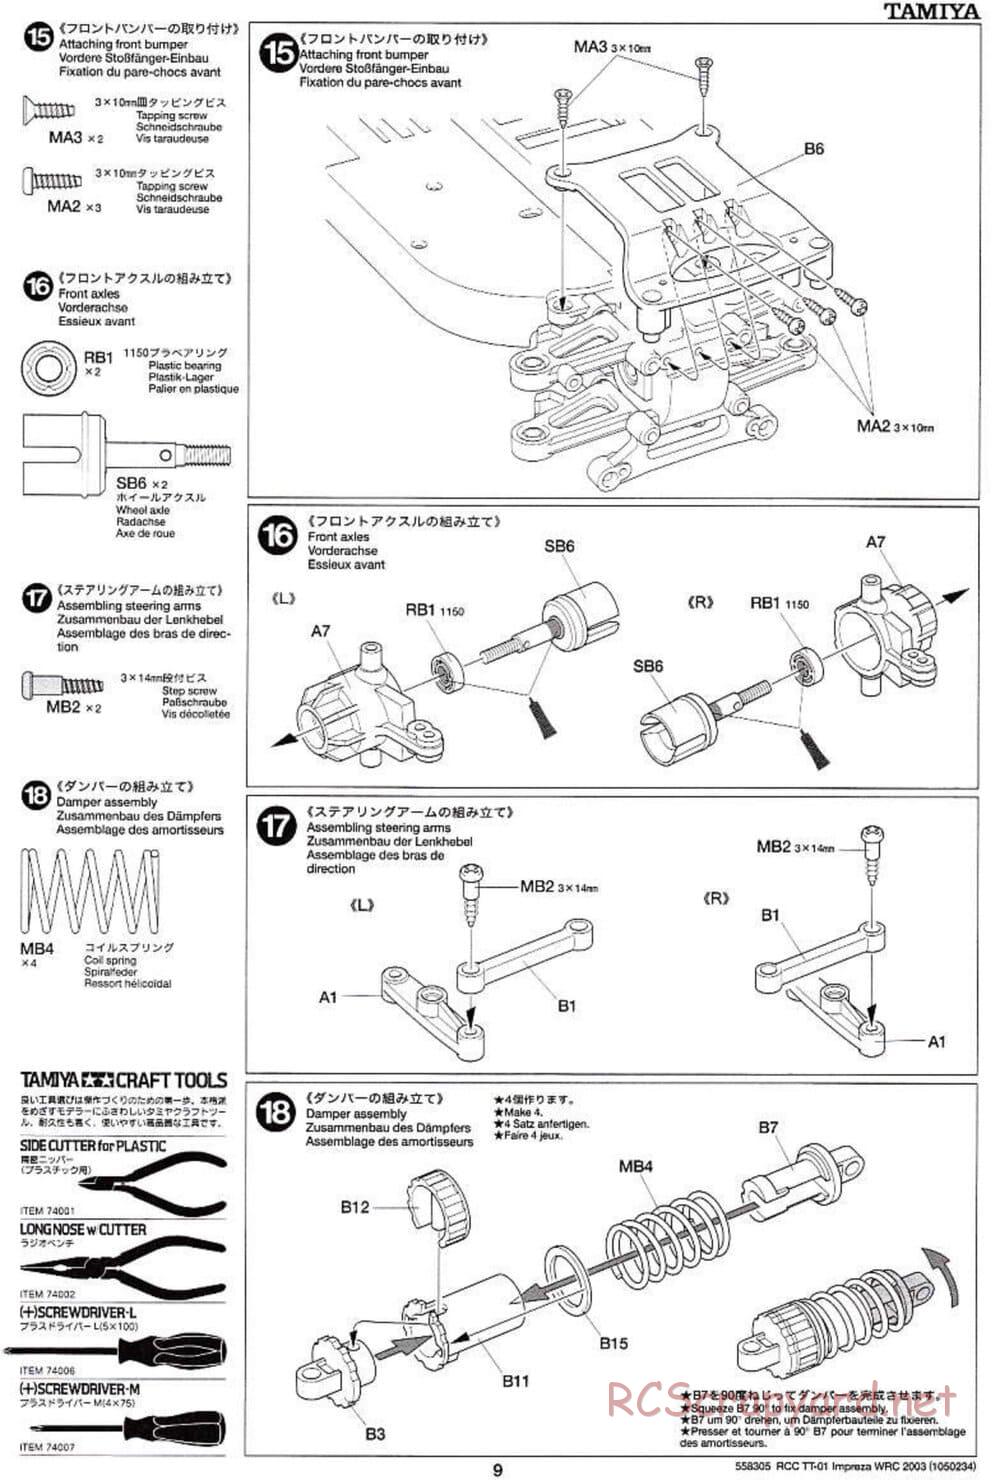 Tamiya - Subaru Impreza WRC 2003 - TT-01 Chassis - Manual - Page 9